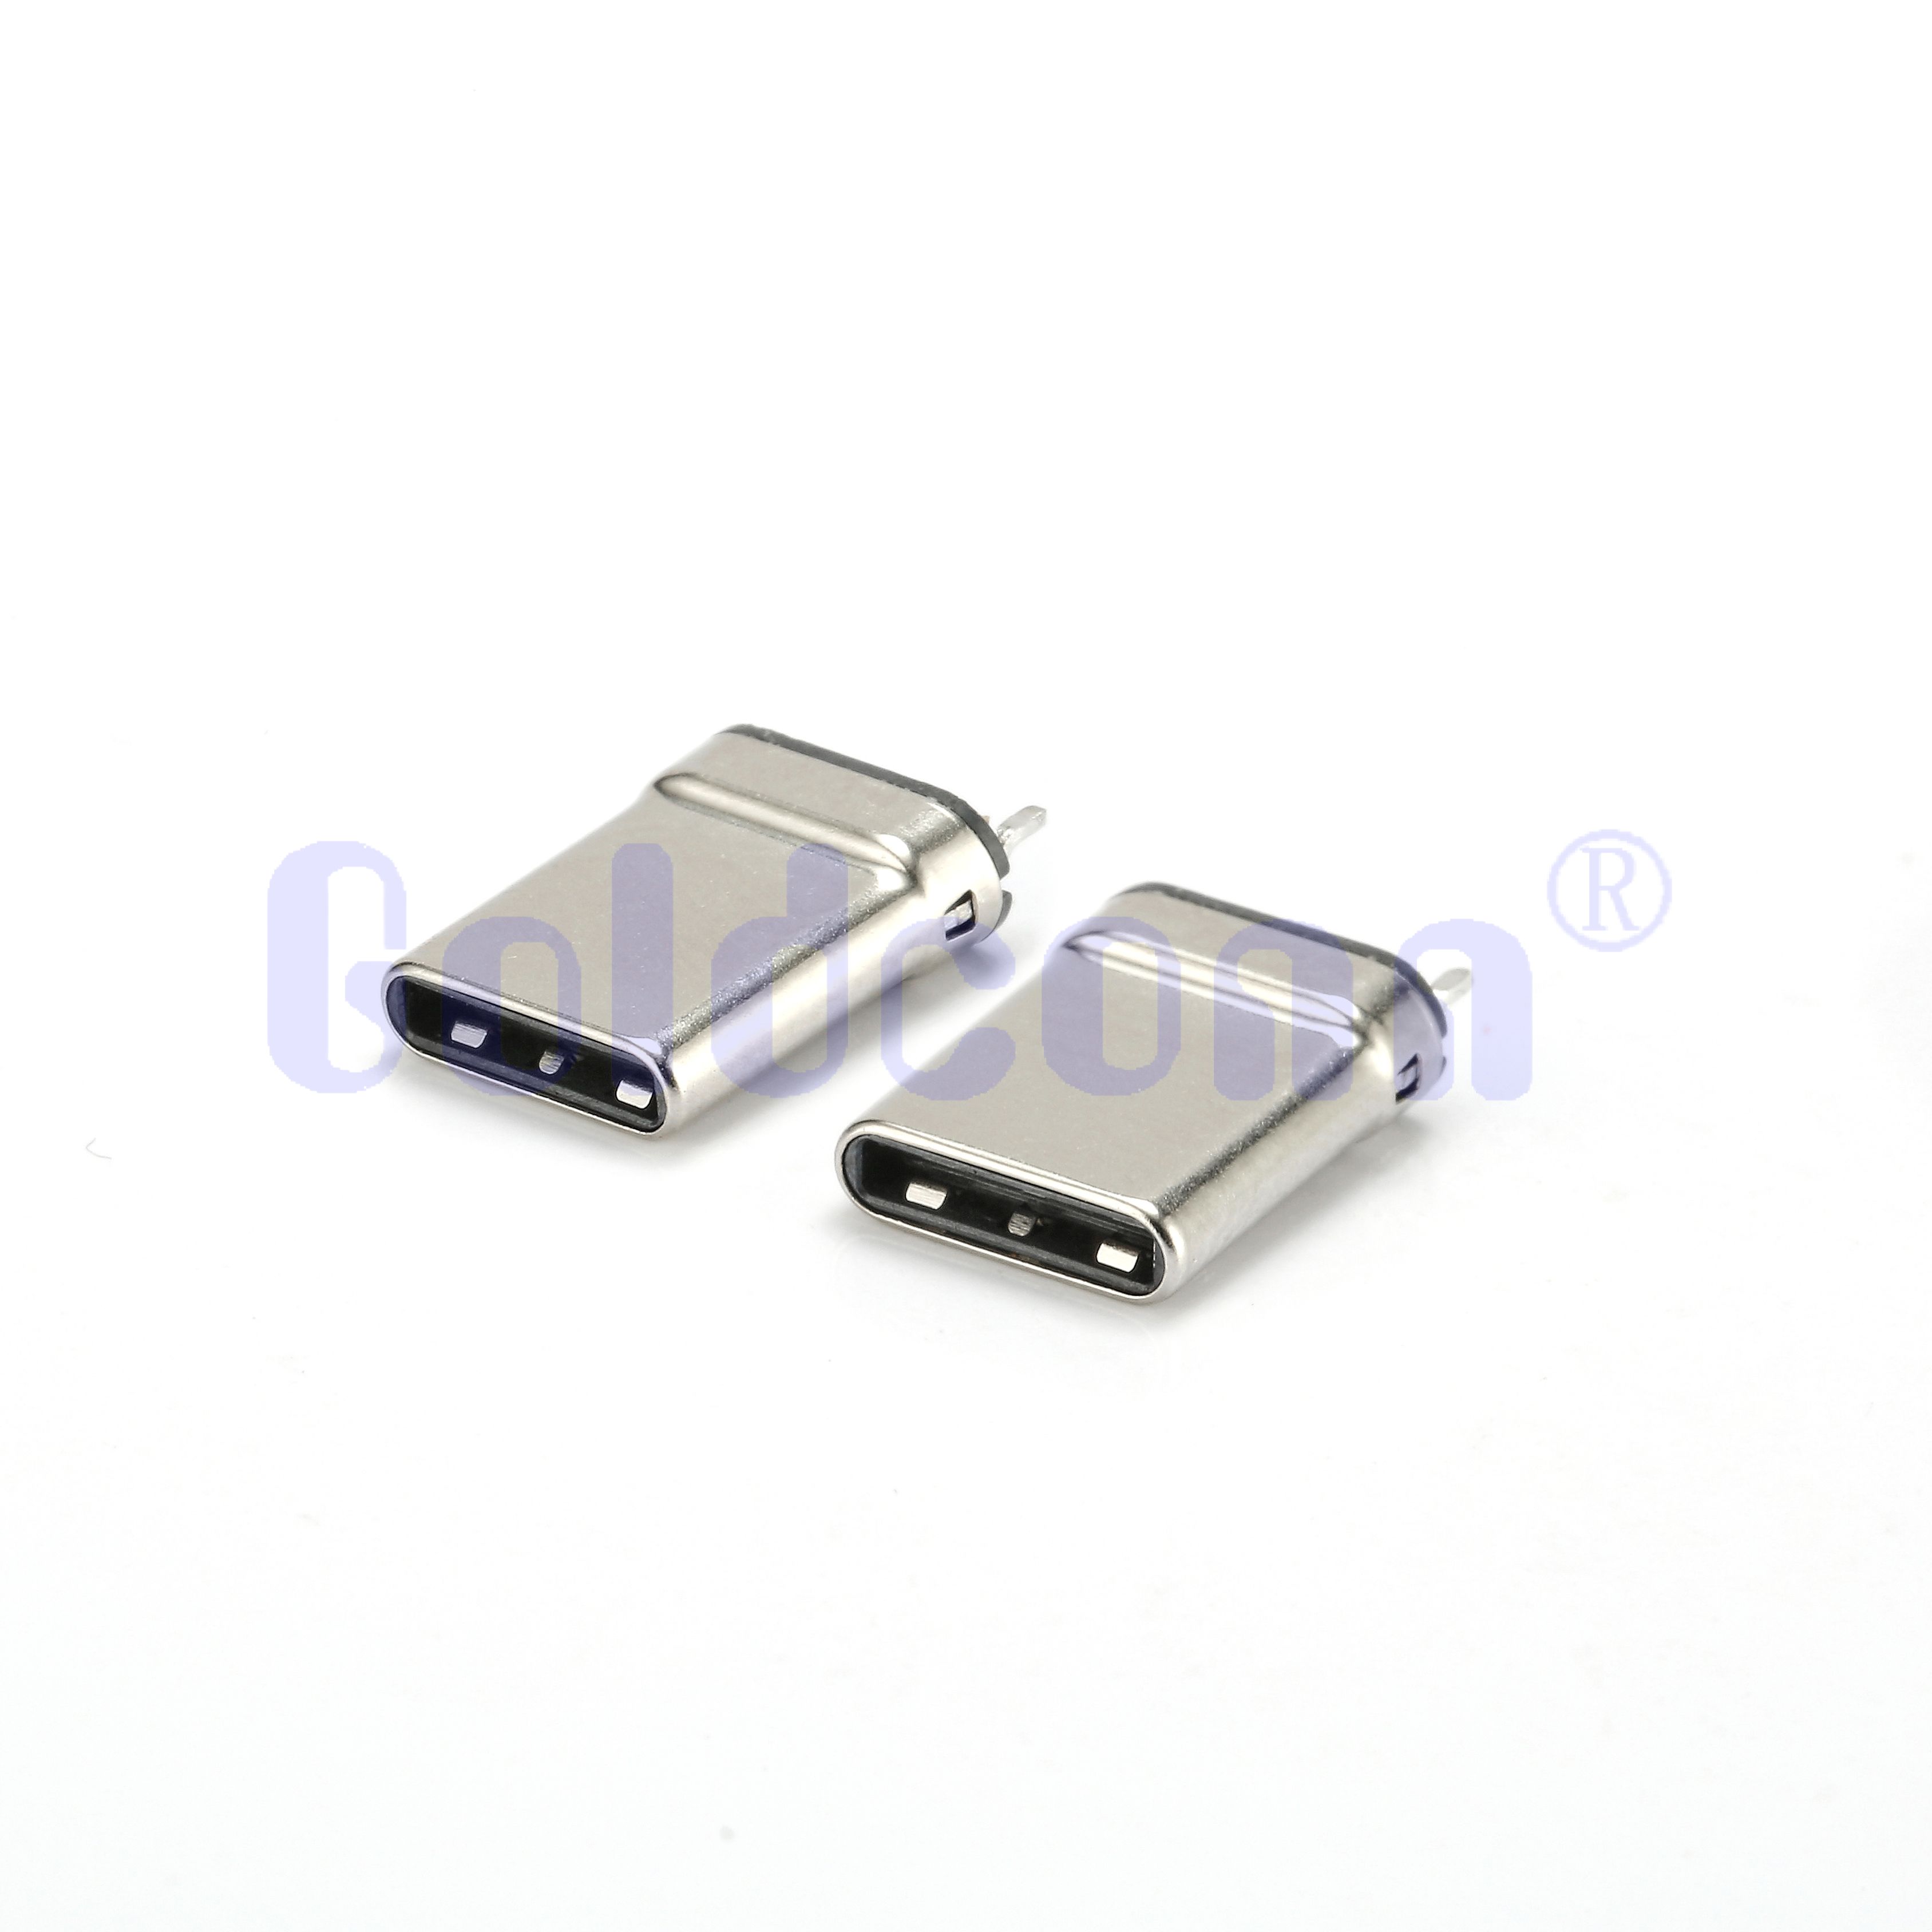 CM090-24LB01U-02 Tipo C TID USB USB 24 pin Conector masculino, férula, estiramiento